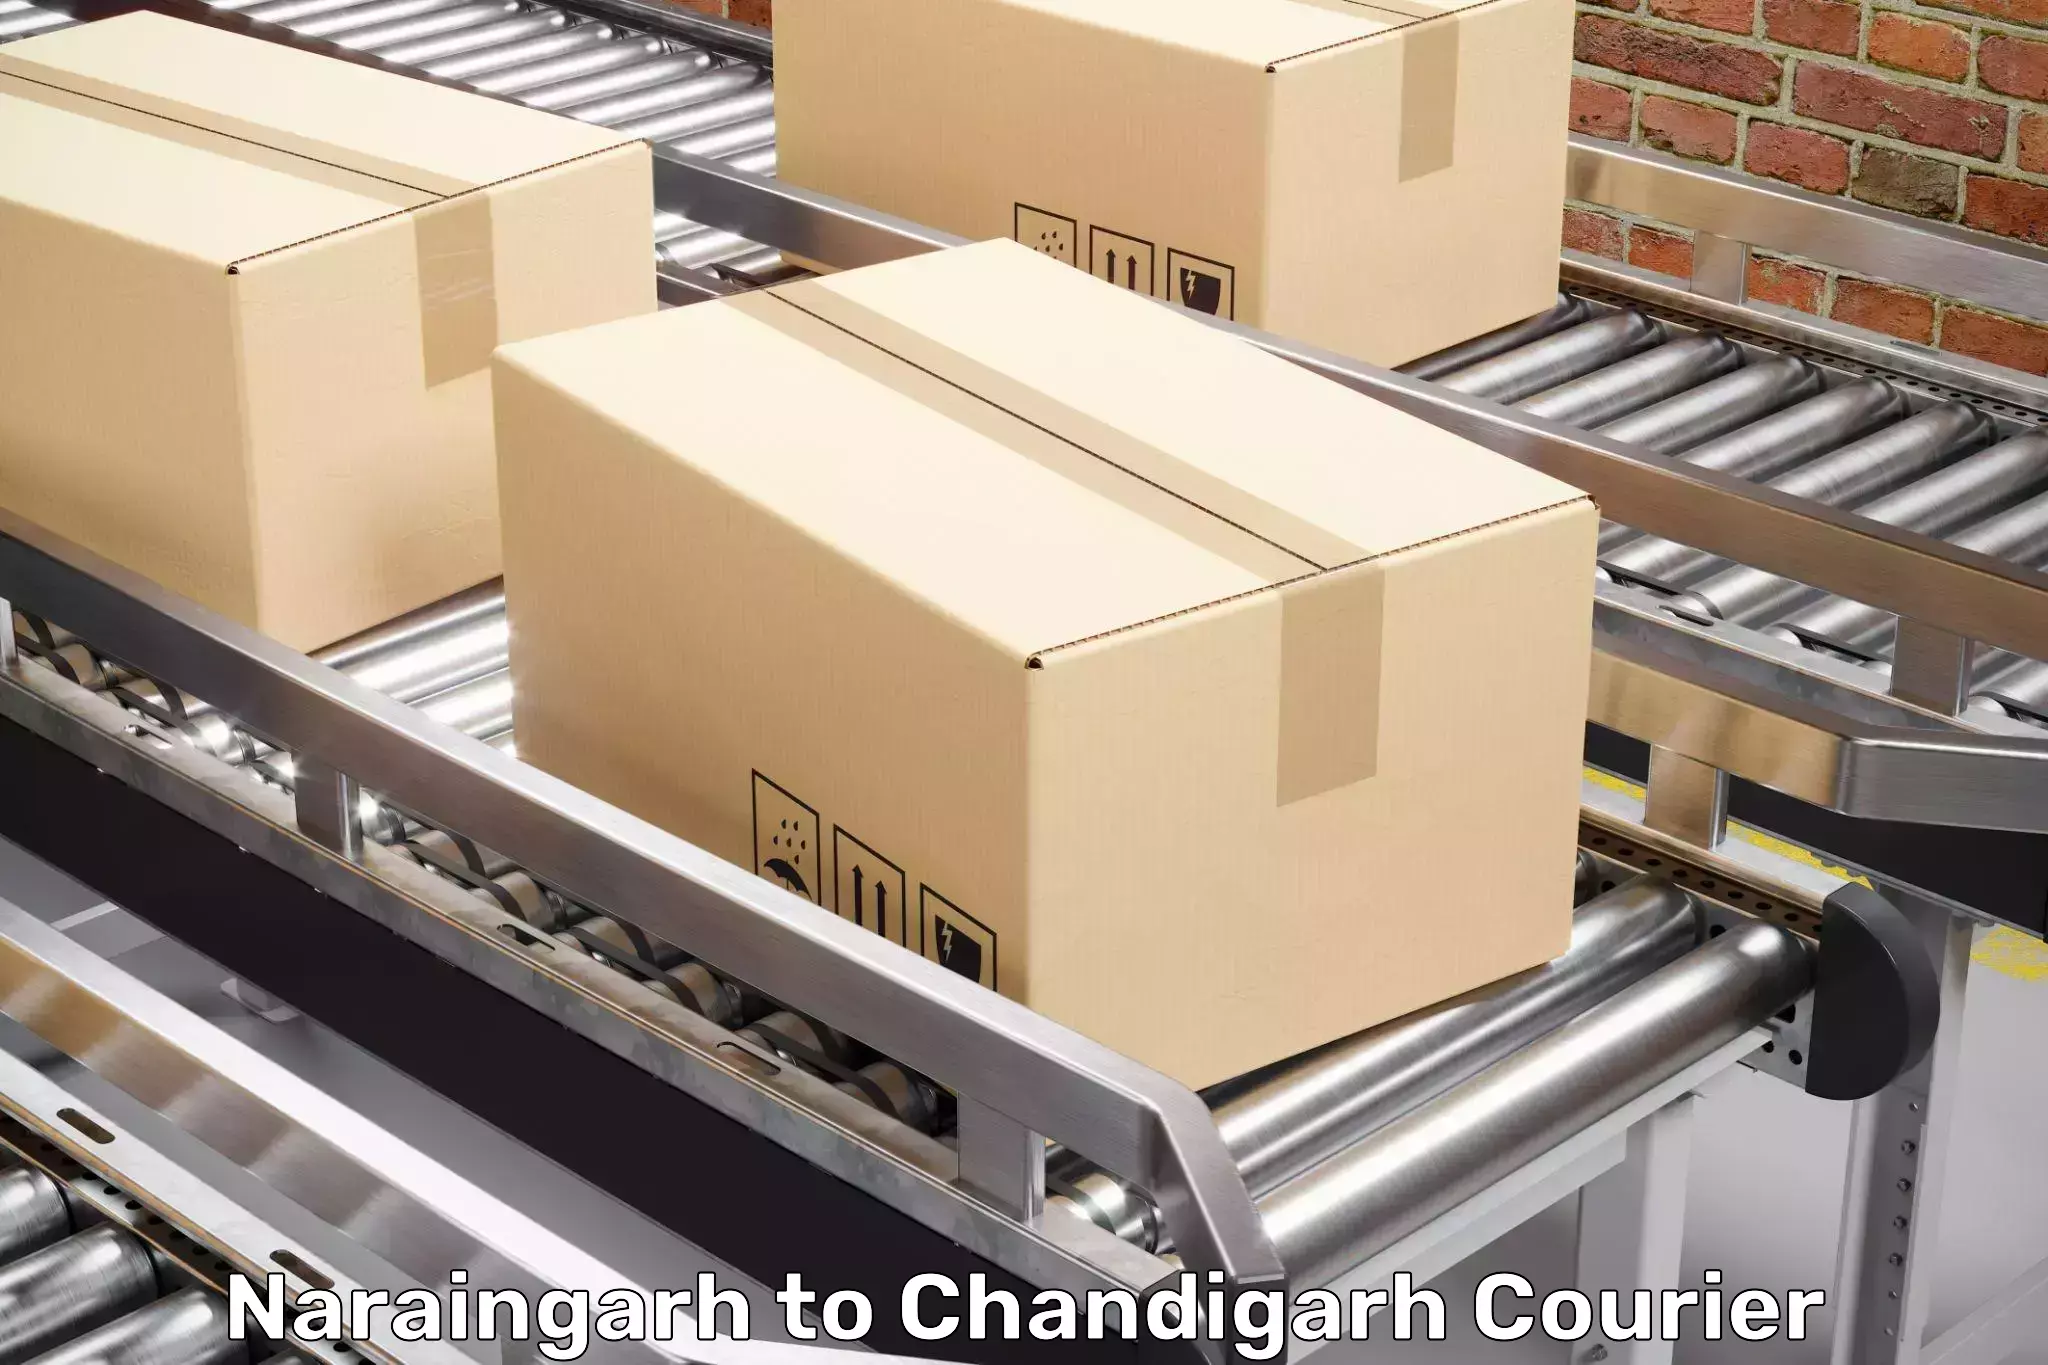 Trusted relocation experts Naraingarh to Chandigarh